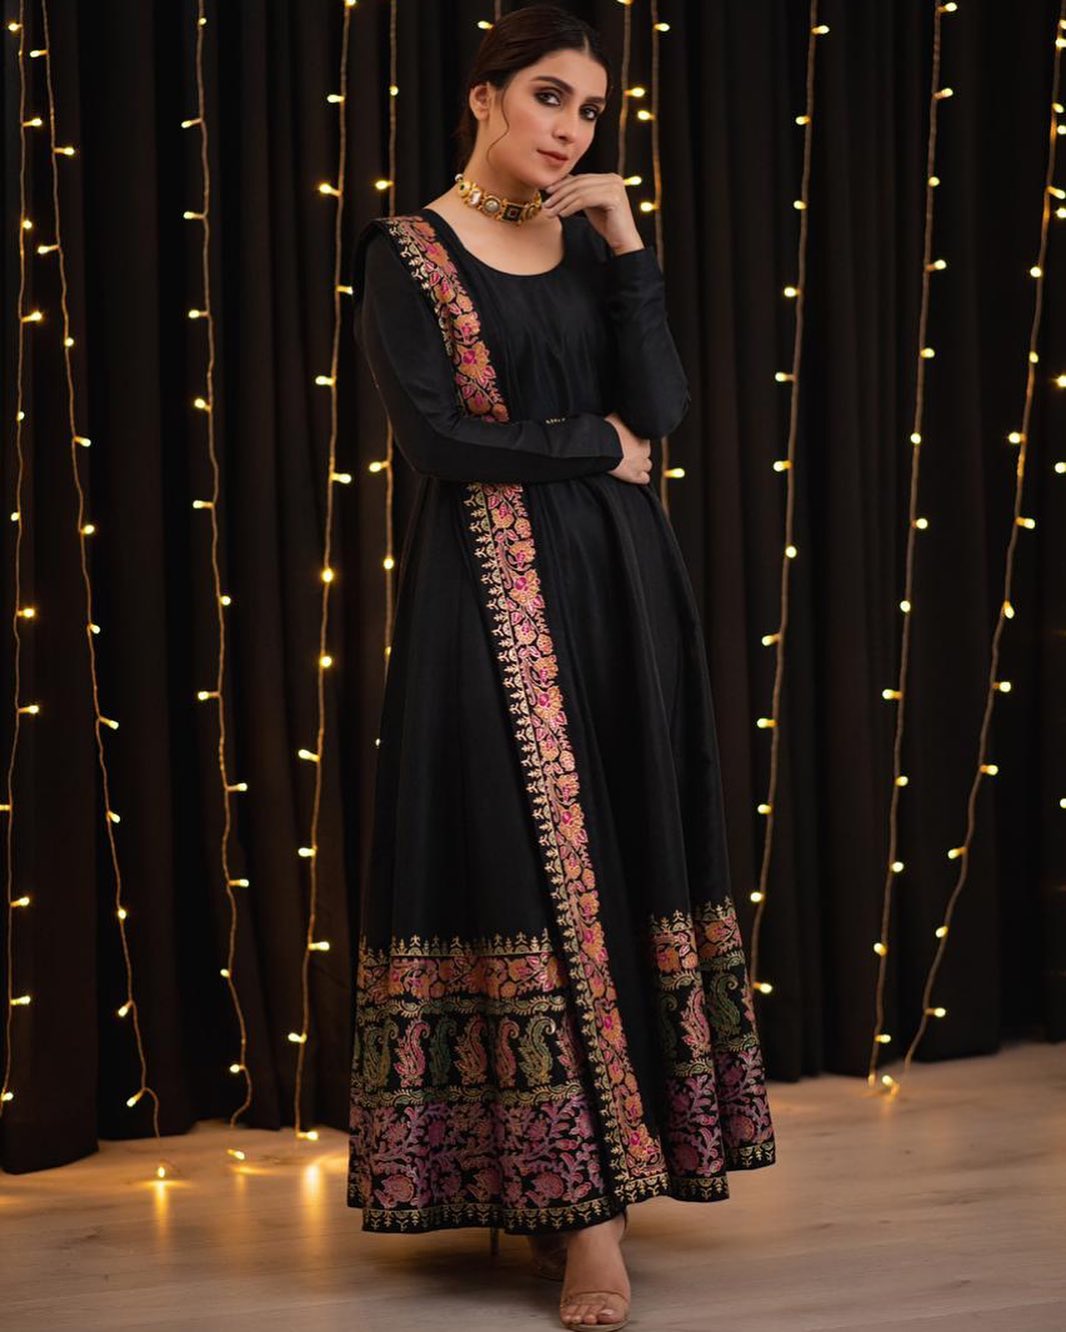 Top Pakistani Actresses In Beautiful Black Dresses - Dressing Tips Pro